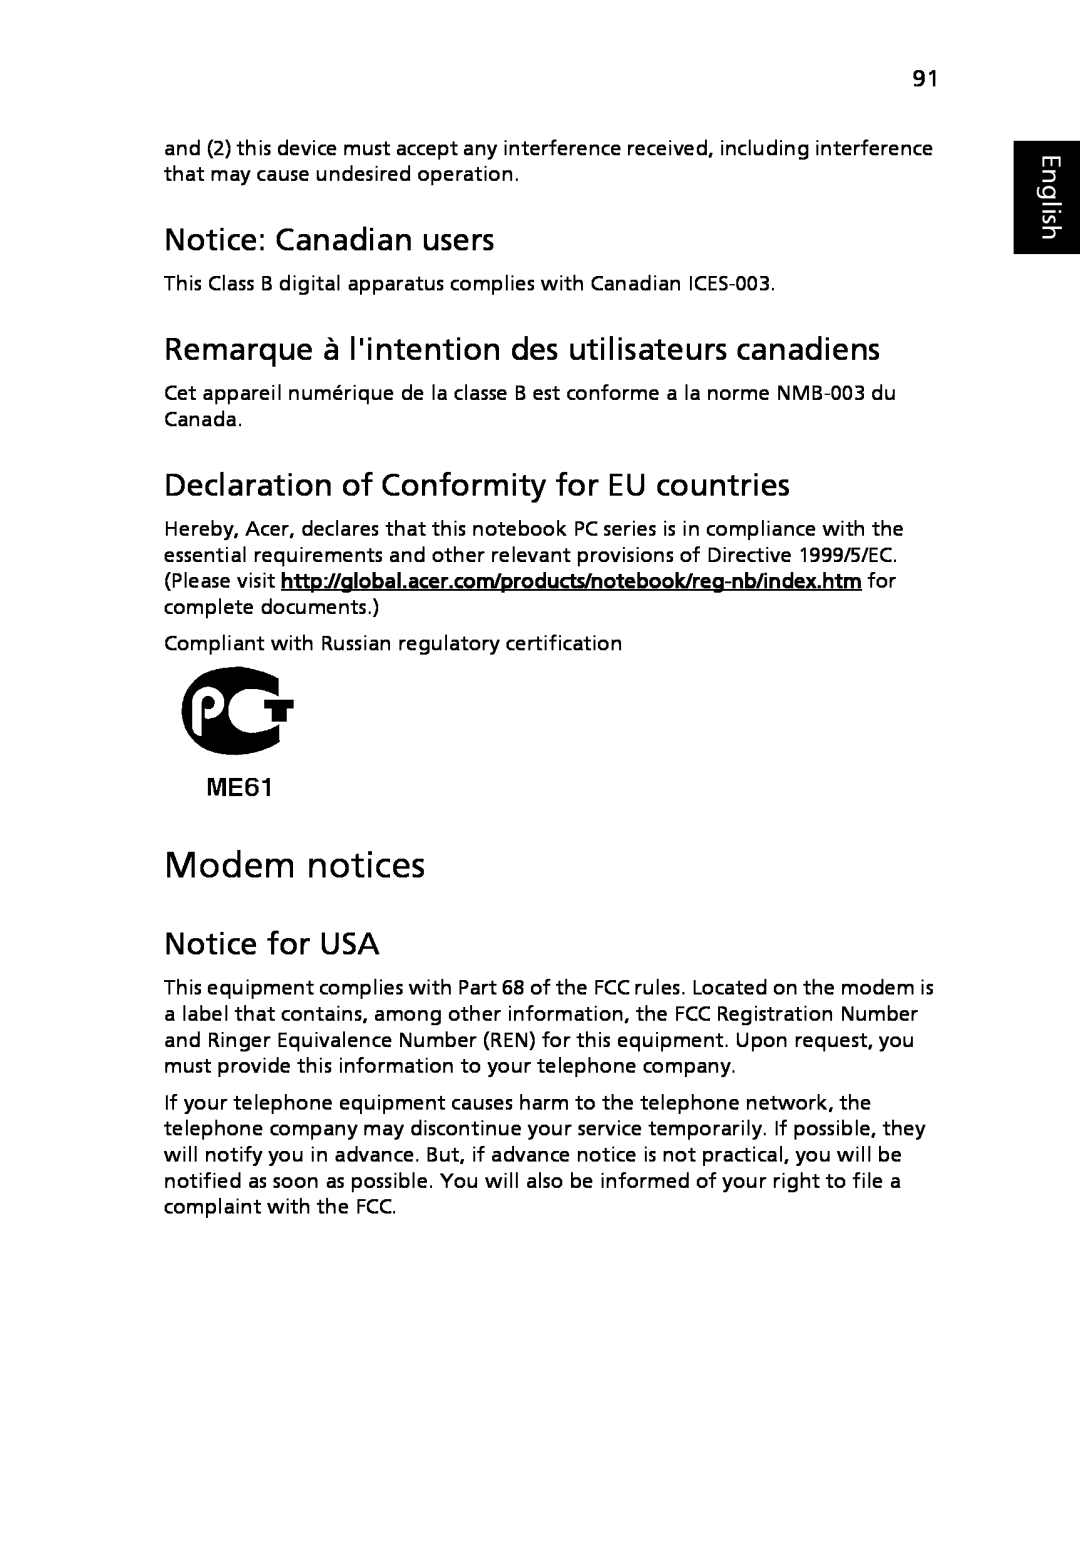 Acer 9120 Modem notices, Notice Canadian users, Remarque à lintention des utilisateurs canadiens, Notice for USA, English 